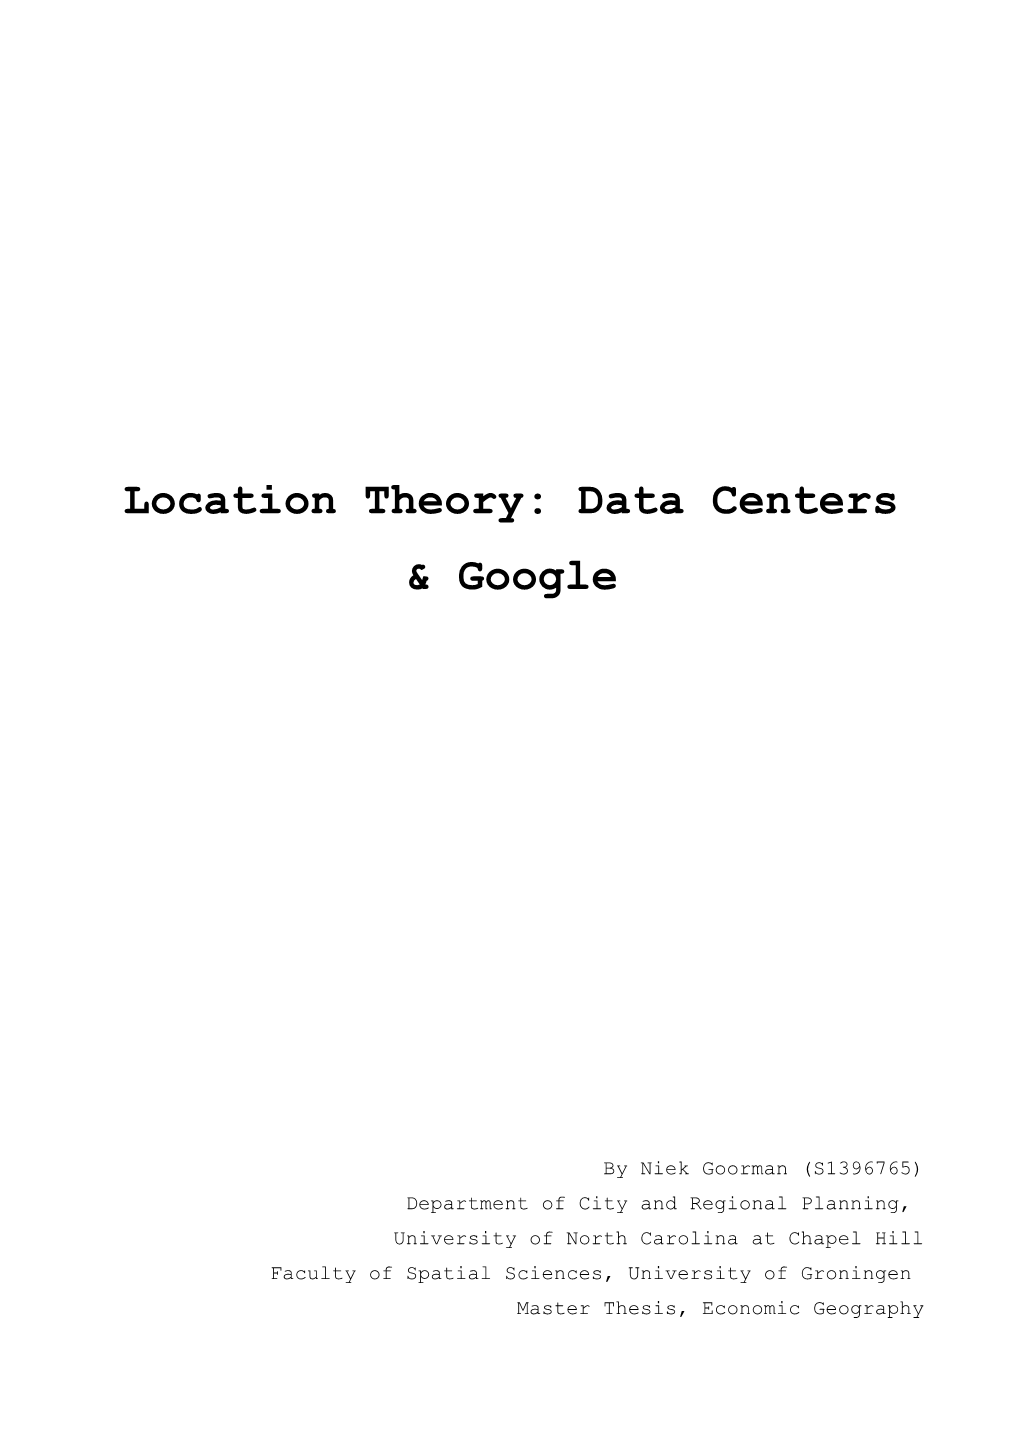 Location Theory: Data Centers & Google